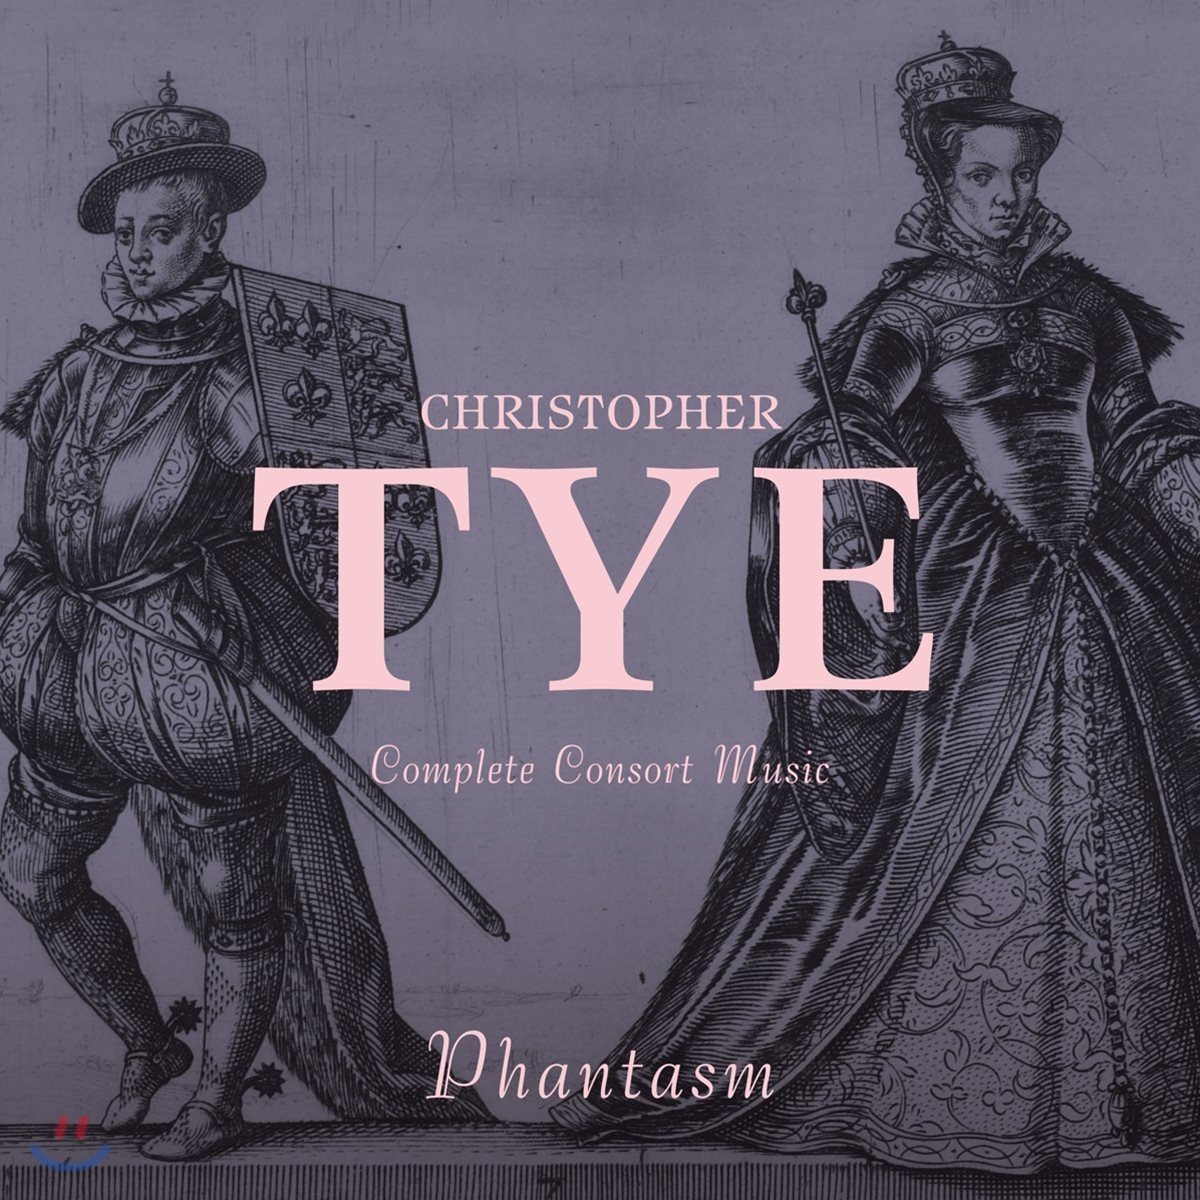 Phantasm 크리스토퍼 타이: 콘소트 뮤직 전집 - 판타즘 (Christopher Tye: Complete Consort Music)